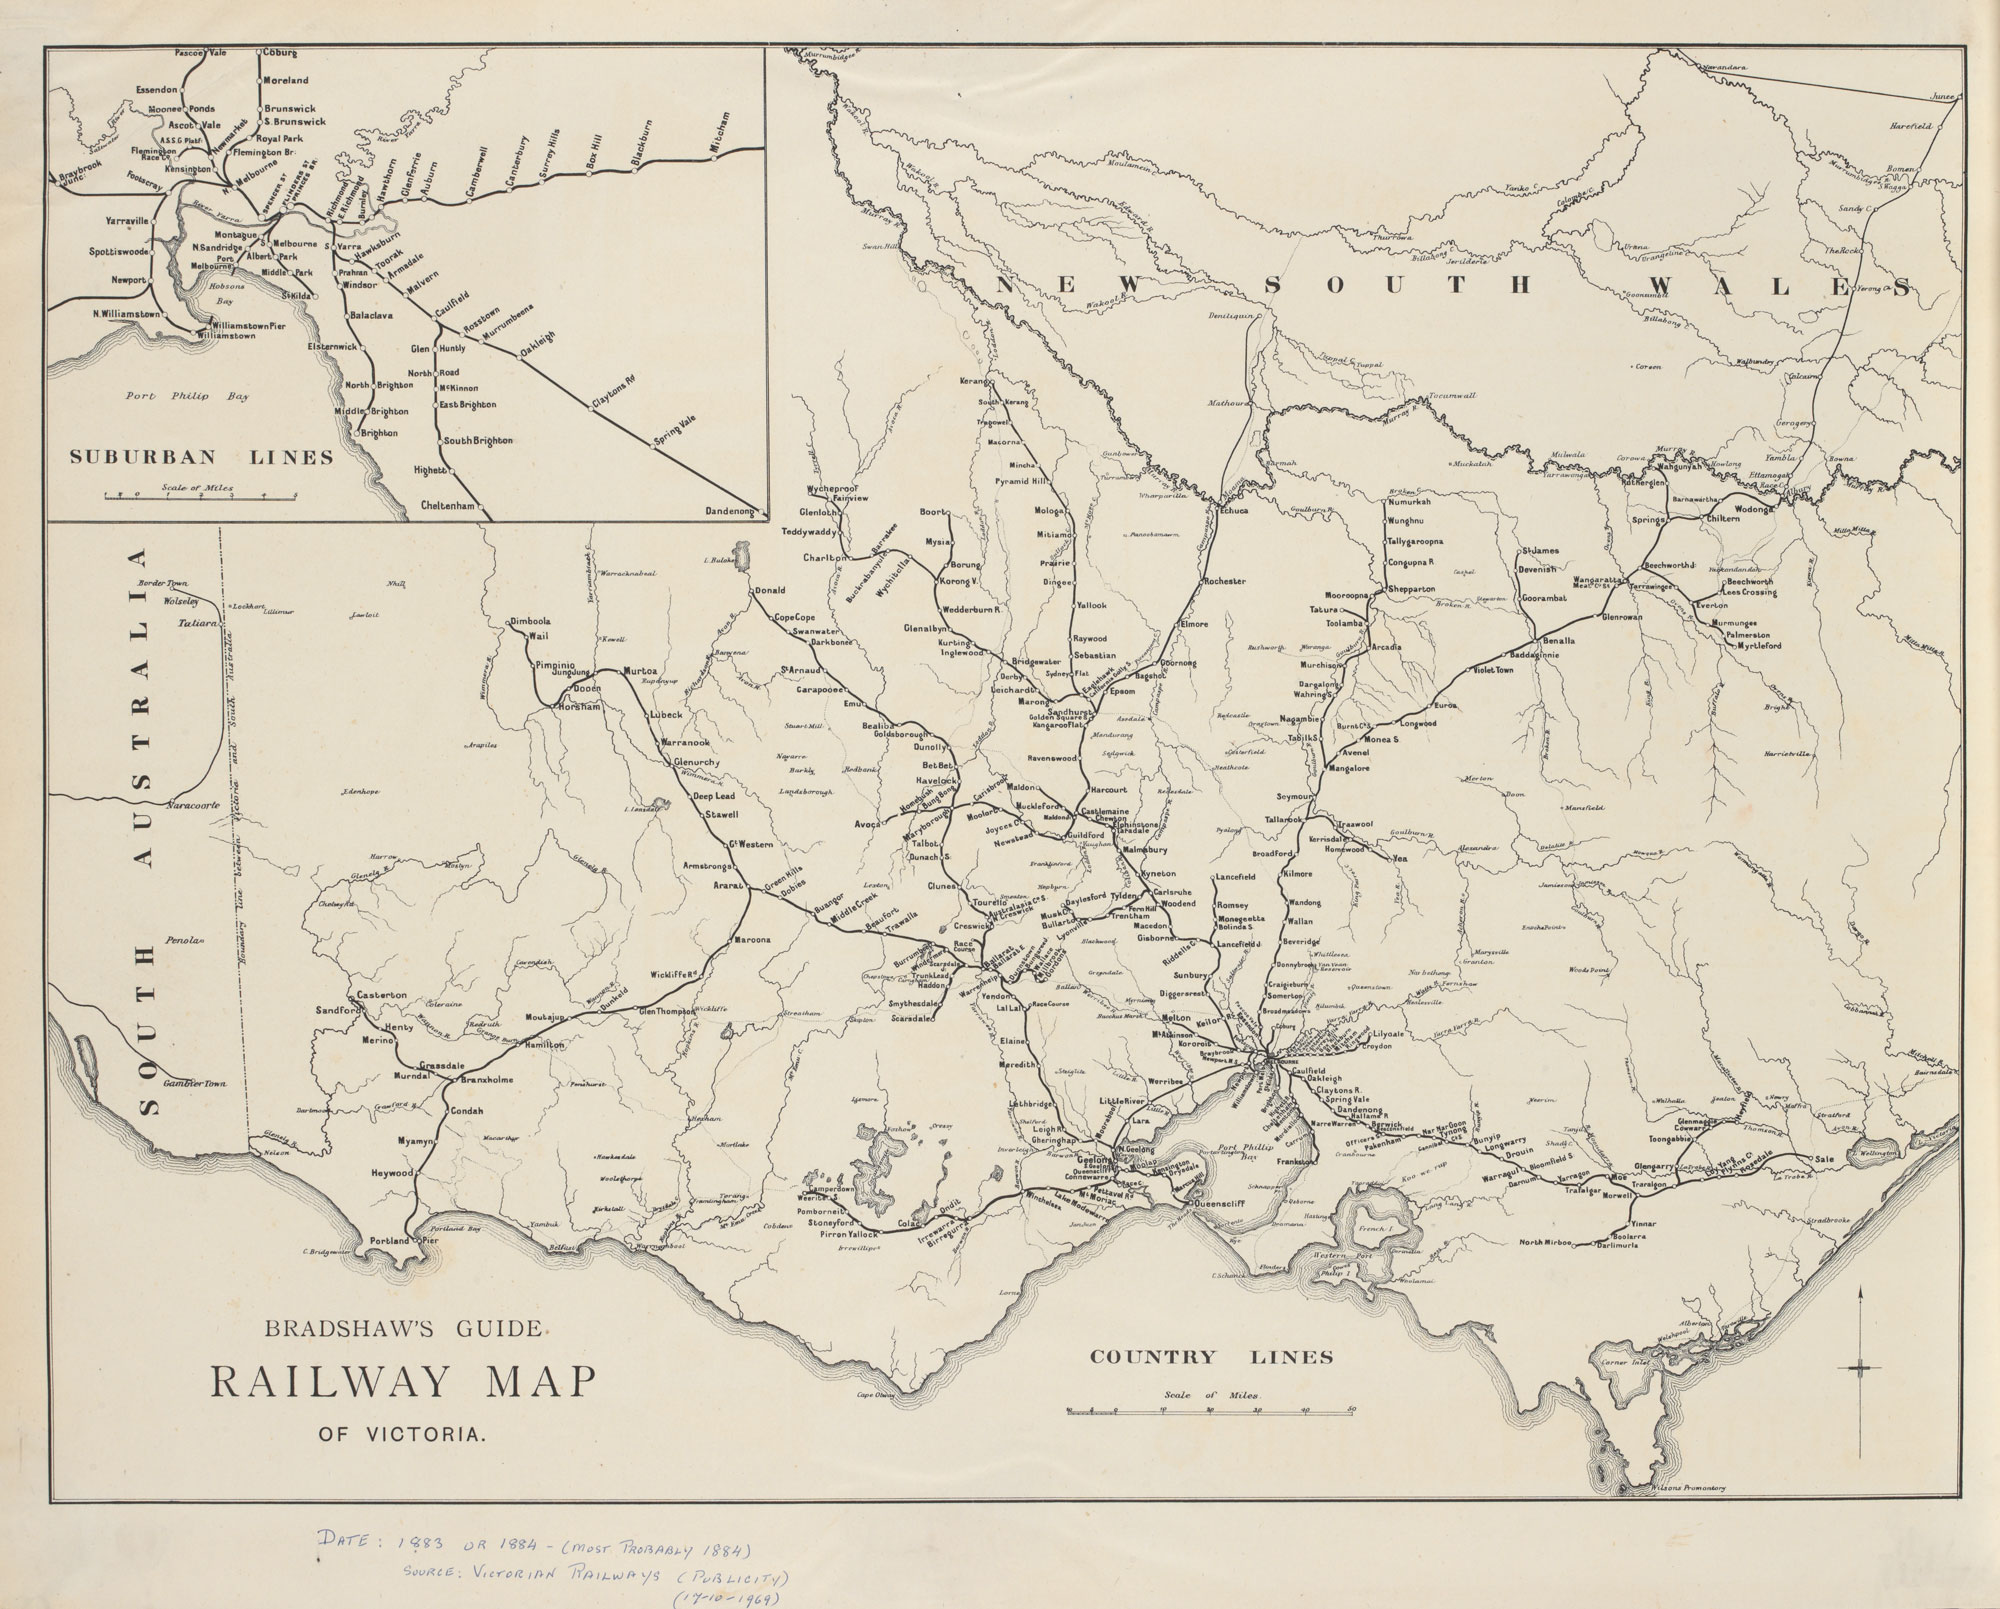 <p>Bradshaw’s Guide railway map of Victoria, 1884</p>
